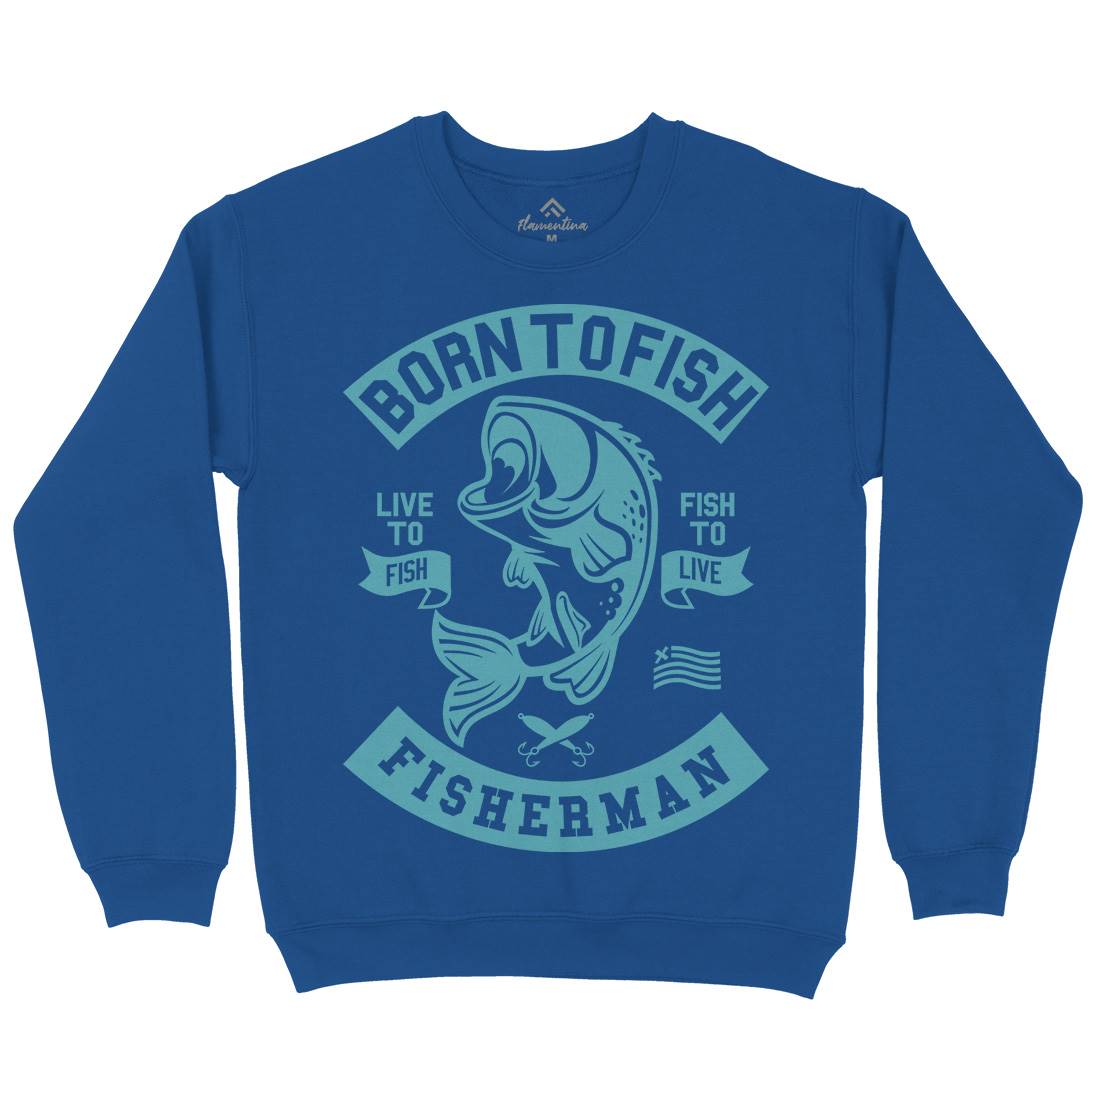 Born To Fish Kids Crew Neck Sweatshirt Fishing A208